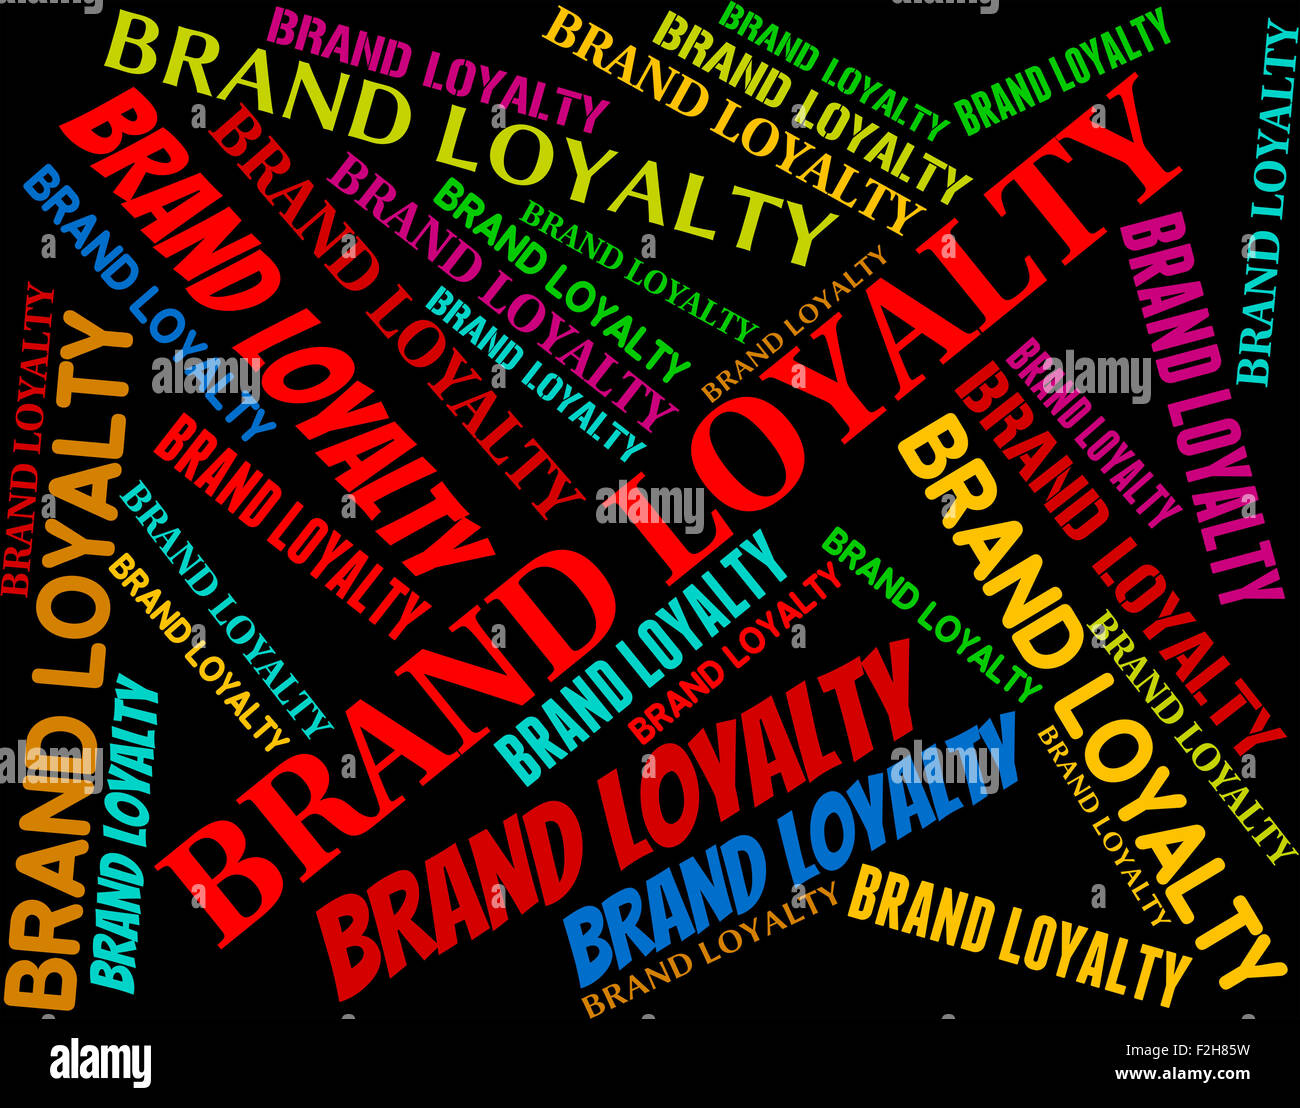 Brand Loyalty Showing Company Identity And Logos Stock Photo